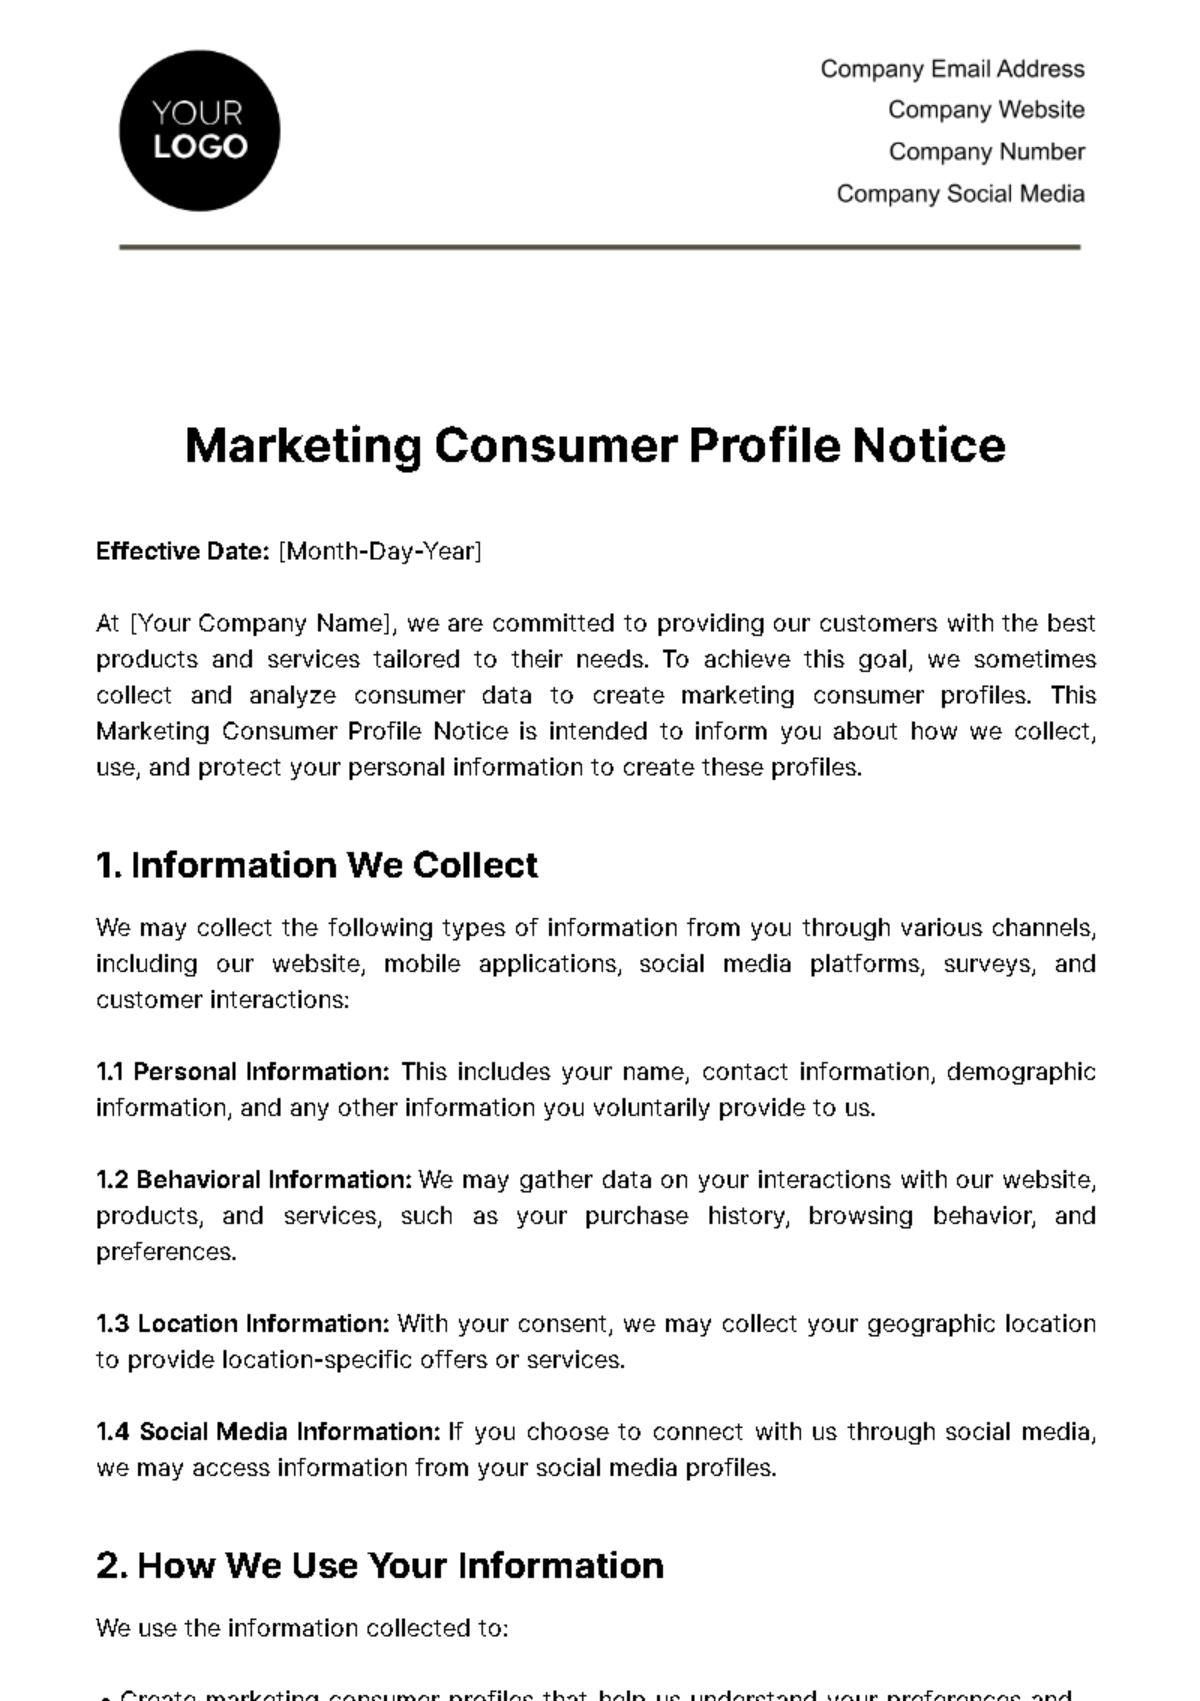 Marketing Consumer Profile Notice Template